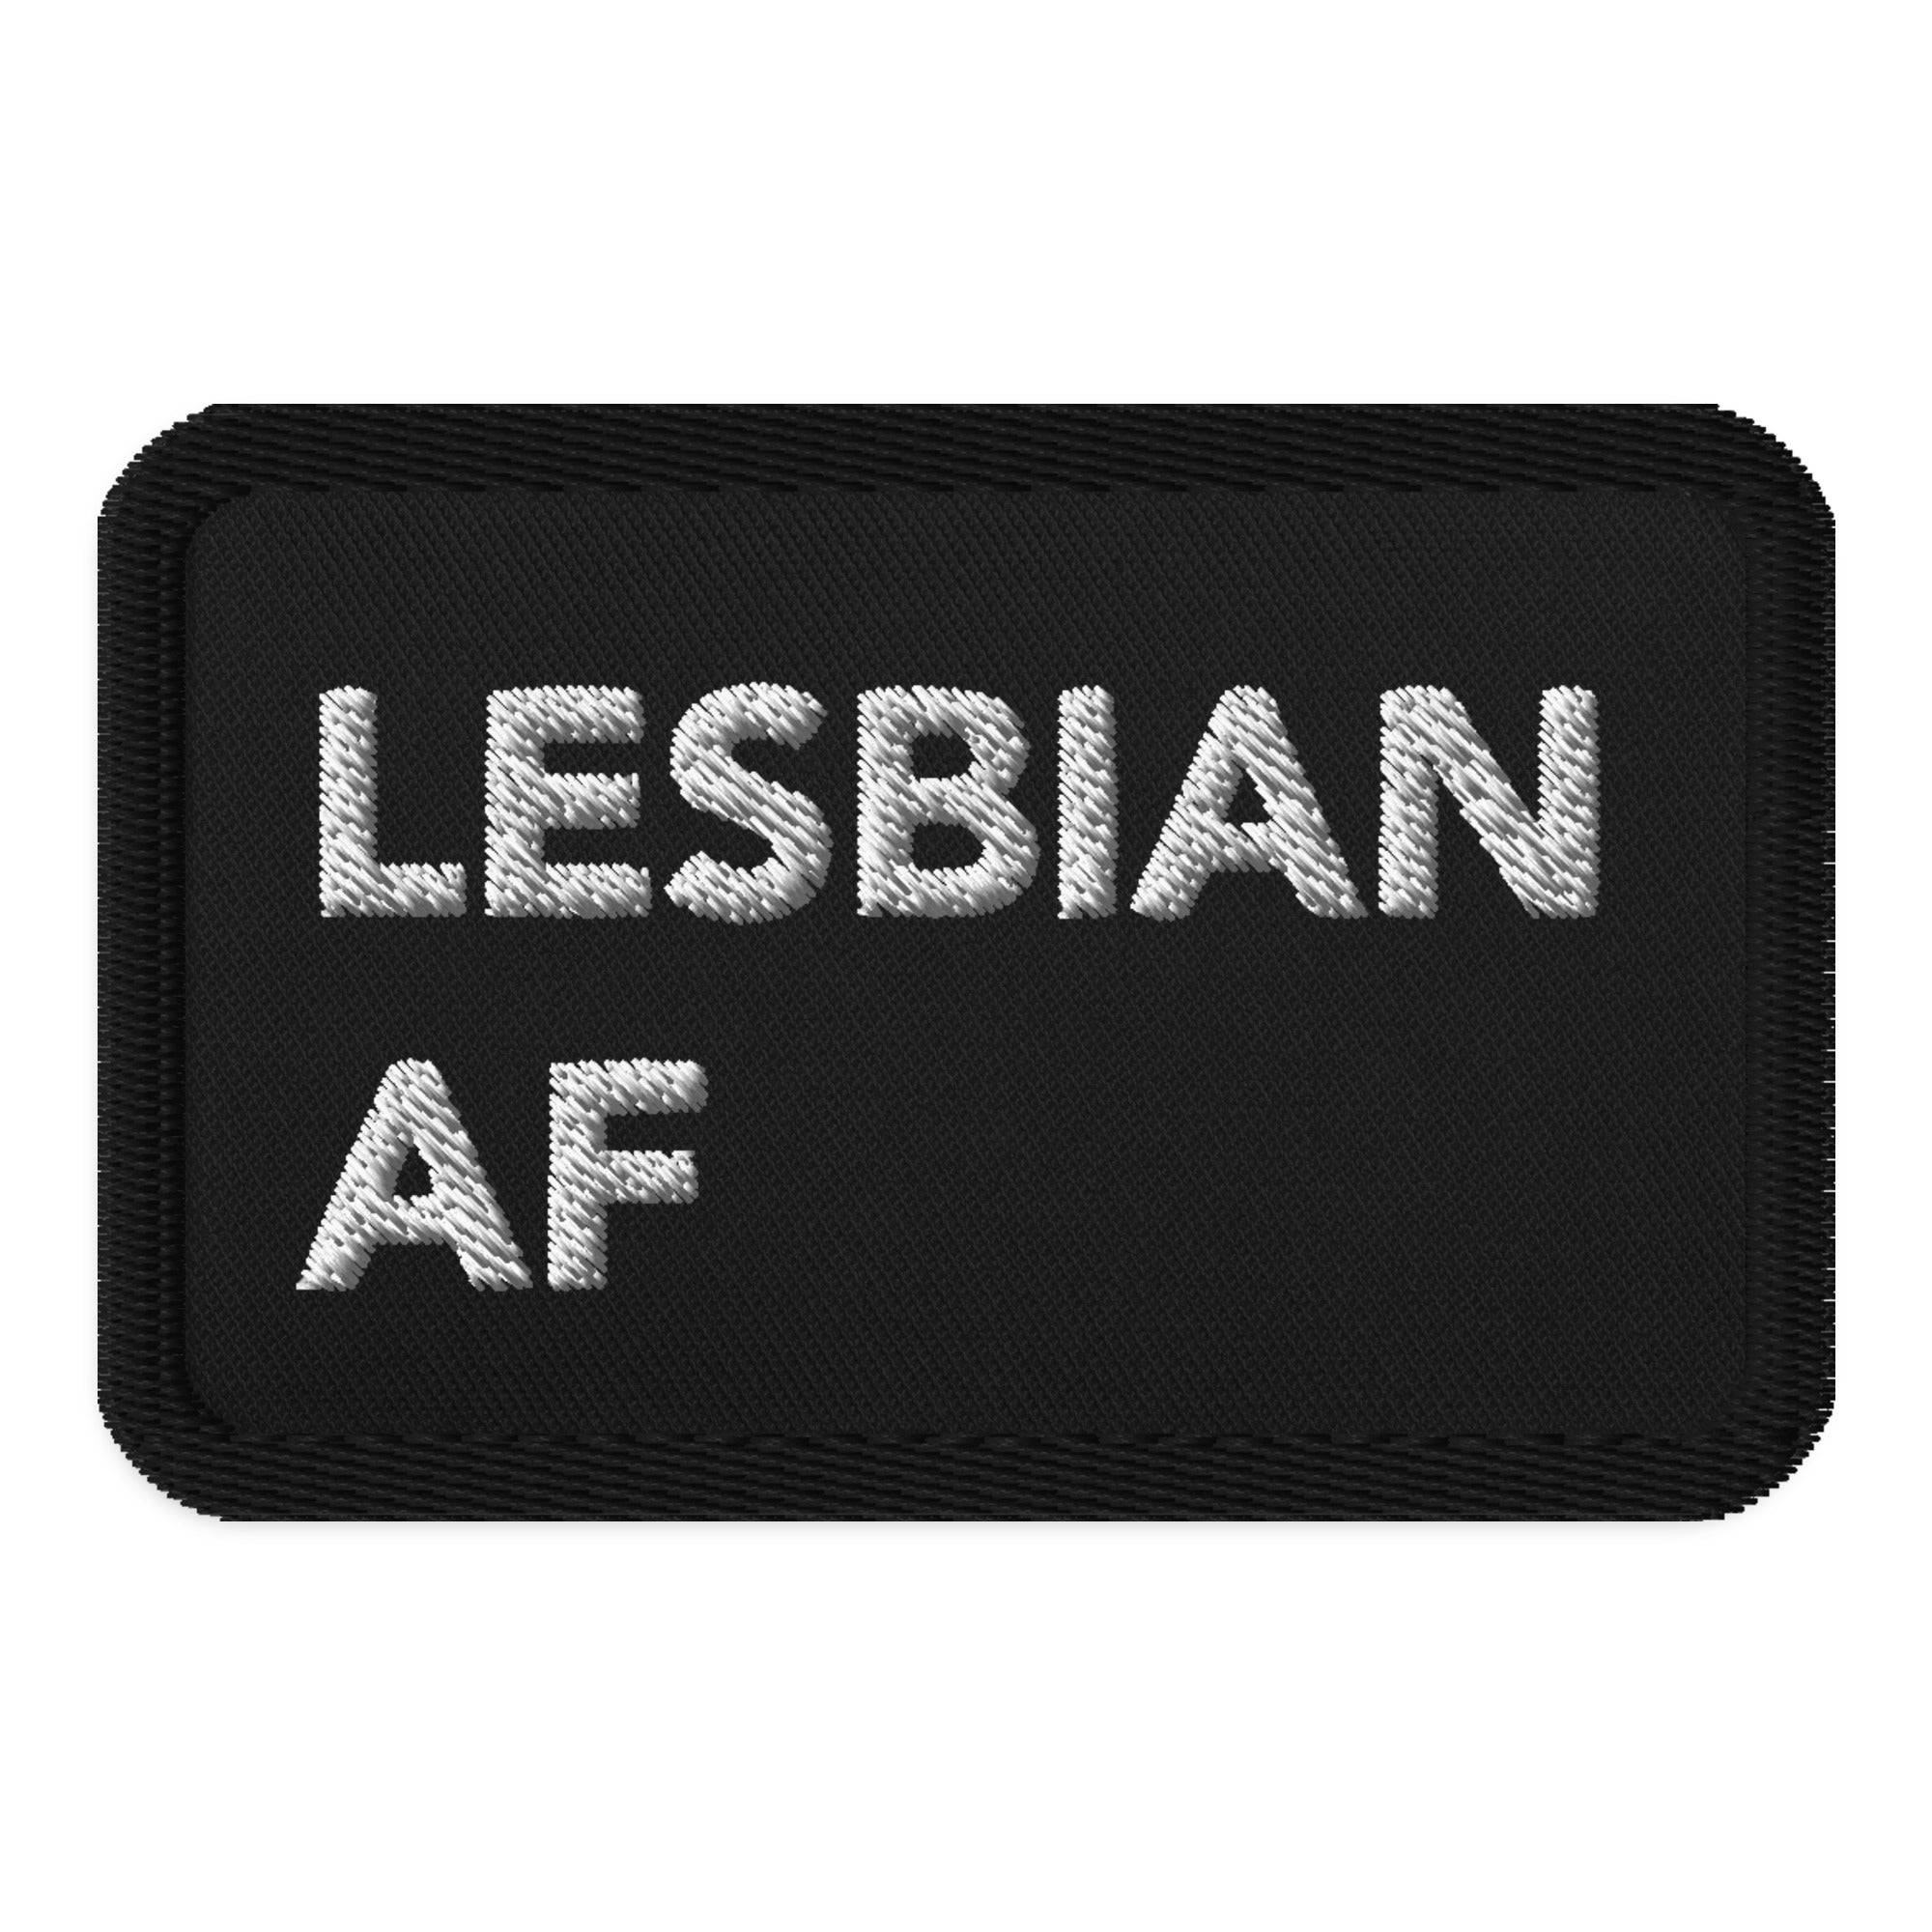 Lesbian Af Embroidered patch